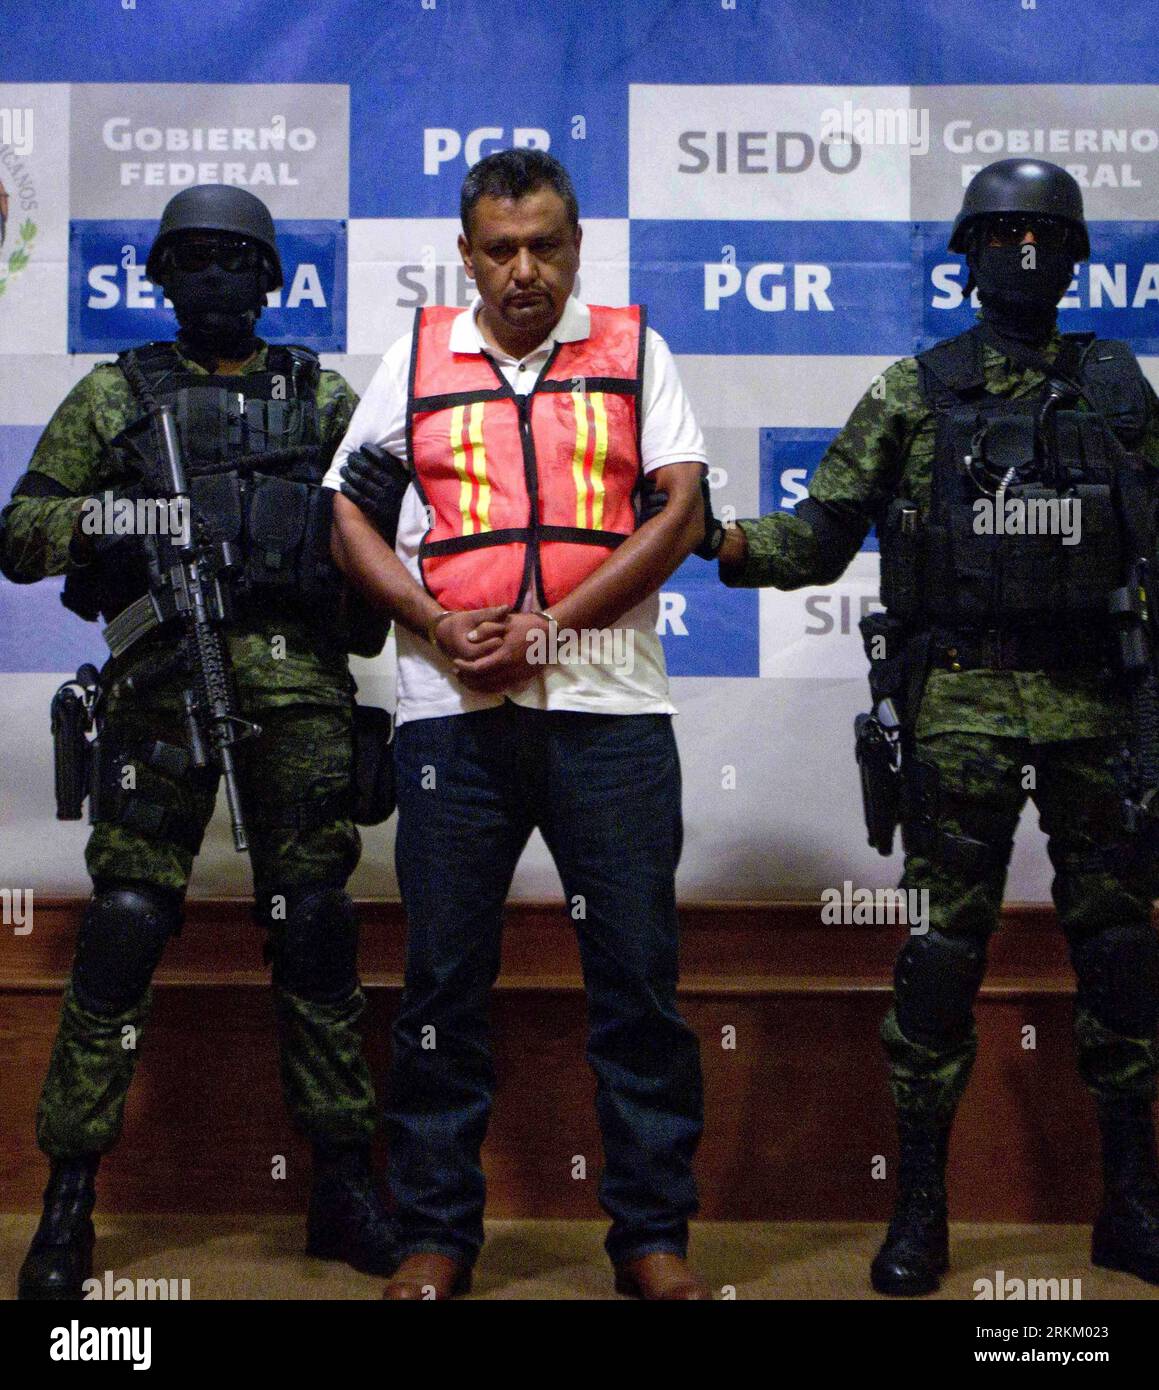 Bildnummer: 56292248  Datum: 17.11.2011  Copyright: imago/Xinhua (111118) -- MEXICO CITY, Nov. 18, 2011 (Xinhua) -- Alfredo Aleman Narvaez (C), known as El Comandante Aleman and alleged leader of the criminal organization Los Zetas and head of criminal activities in the state of San Luis Potosi, is presented to the media in Mexico City, Mexico, Nov. 17, 2011. (Xinhua/Claudio Cruz) (ctt) MEXICO-MEXICO CITY-SECURITY-DRUGS PUBLICATIONxNOTxINxCHN People Kriminalität Verhaftung Mexiko x0x xtm 2011 quadrat premiumd      56292248 Date 17 11 2011 Copyright Imago XINHUA  Mexico City Nov 18 2011 XINHUA Stock Photo